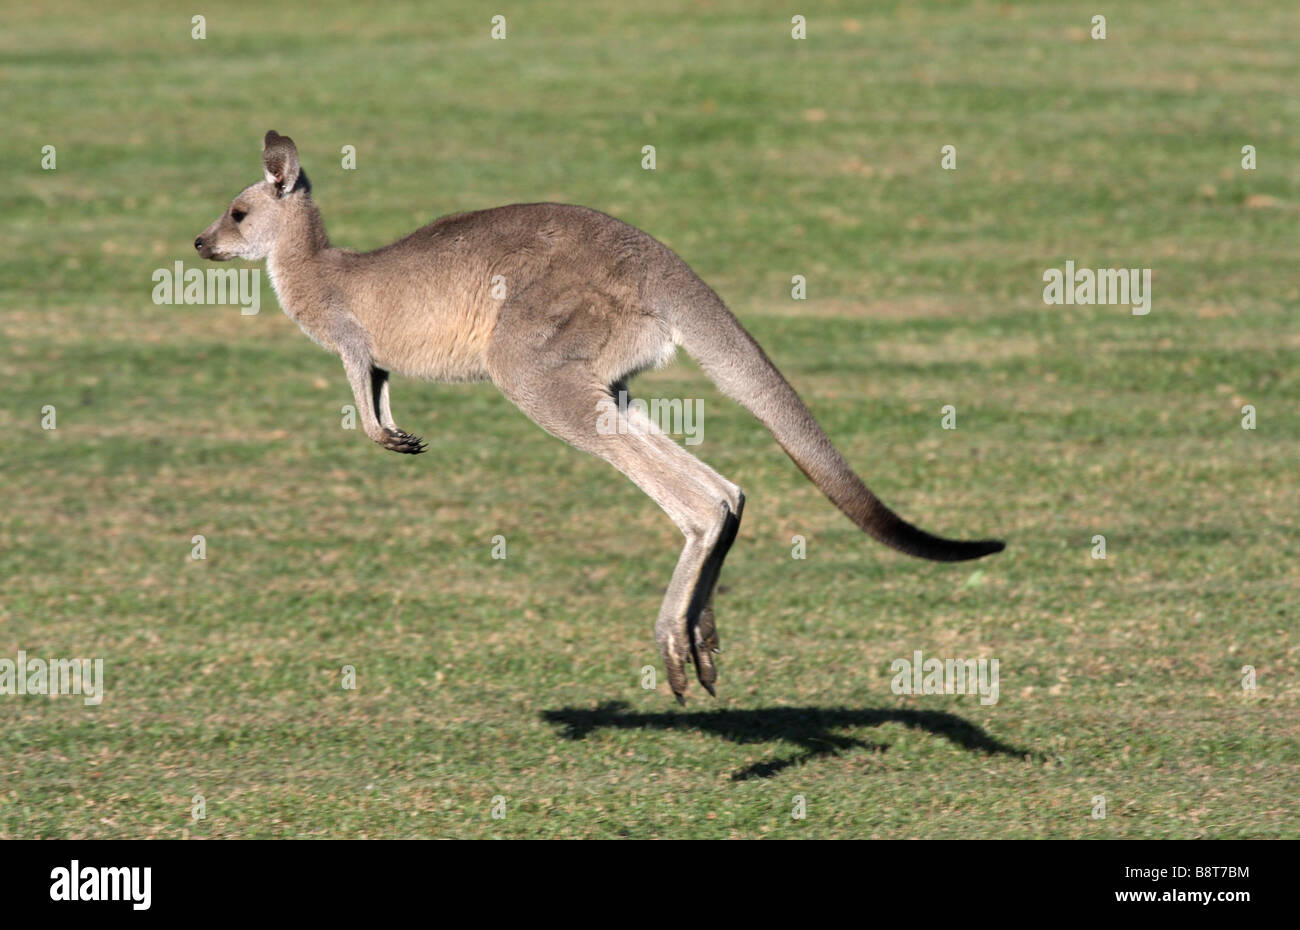 Eastern grey kangaroo hopping Stock Photo